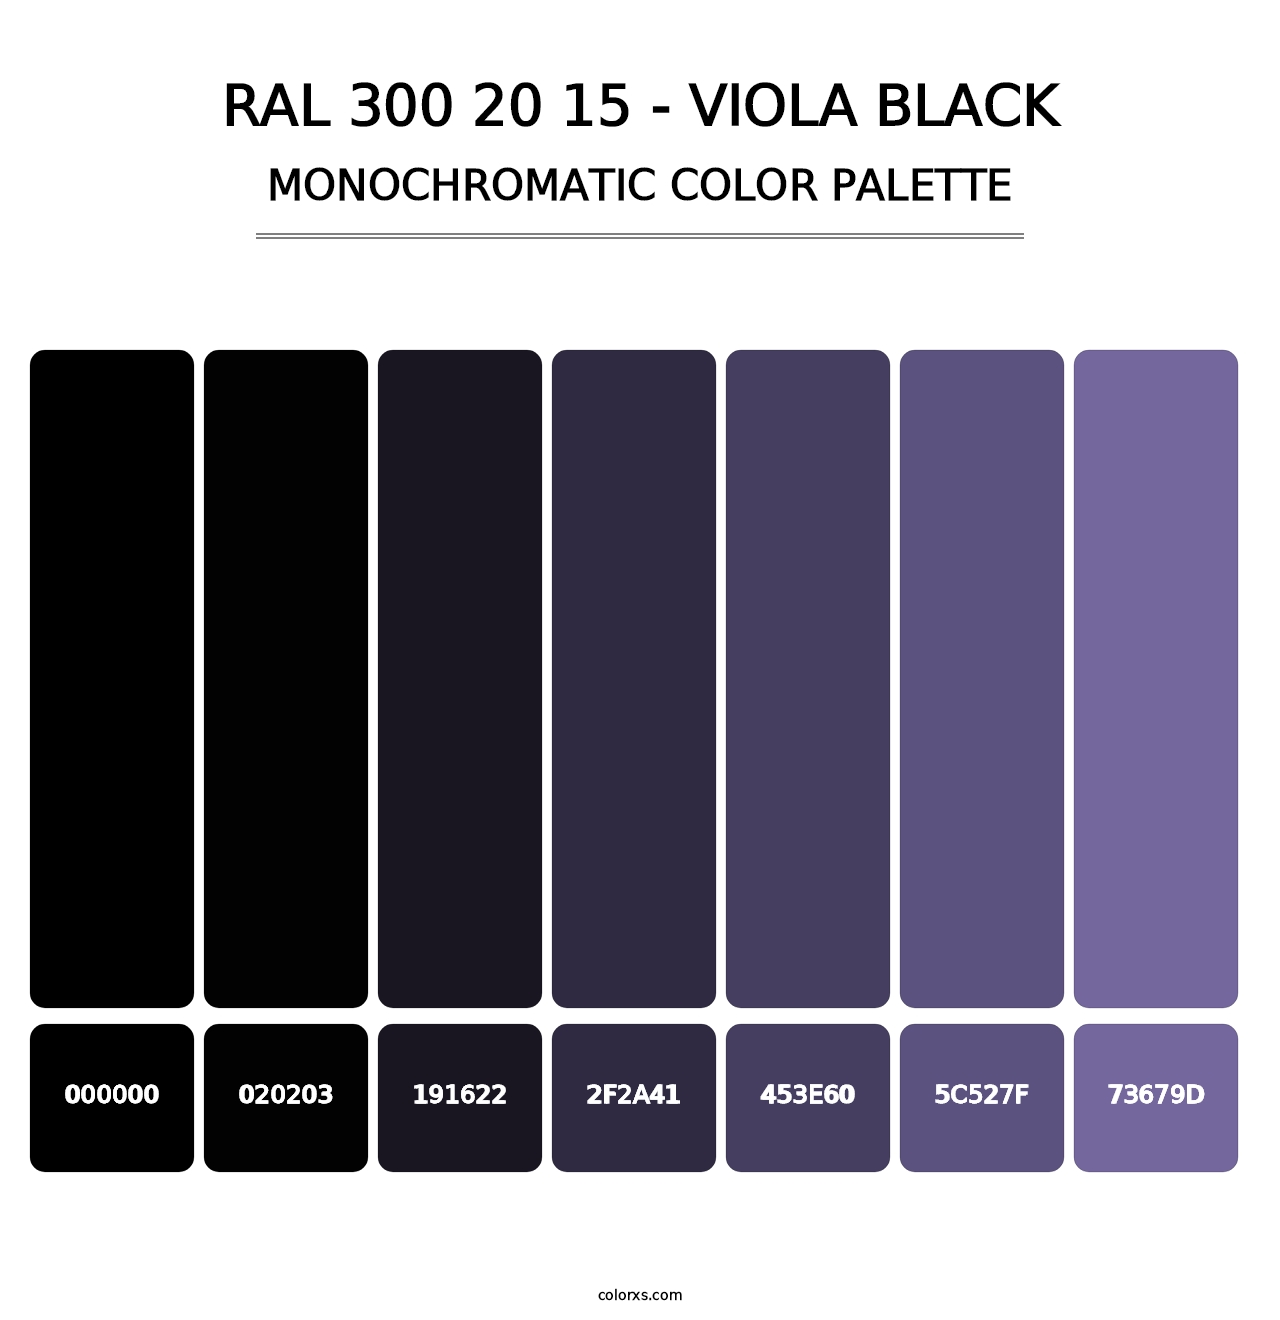 RAL 300 20 15 - Viola Black - Monochromatic Color Palette